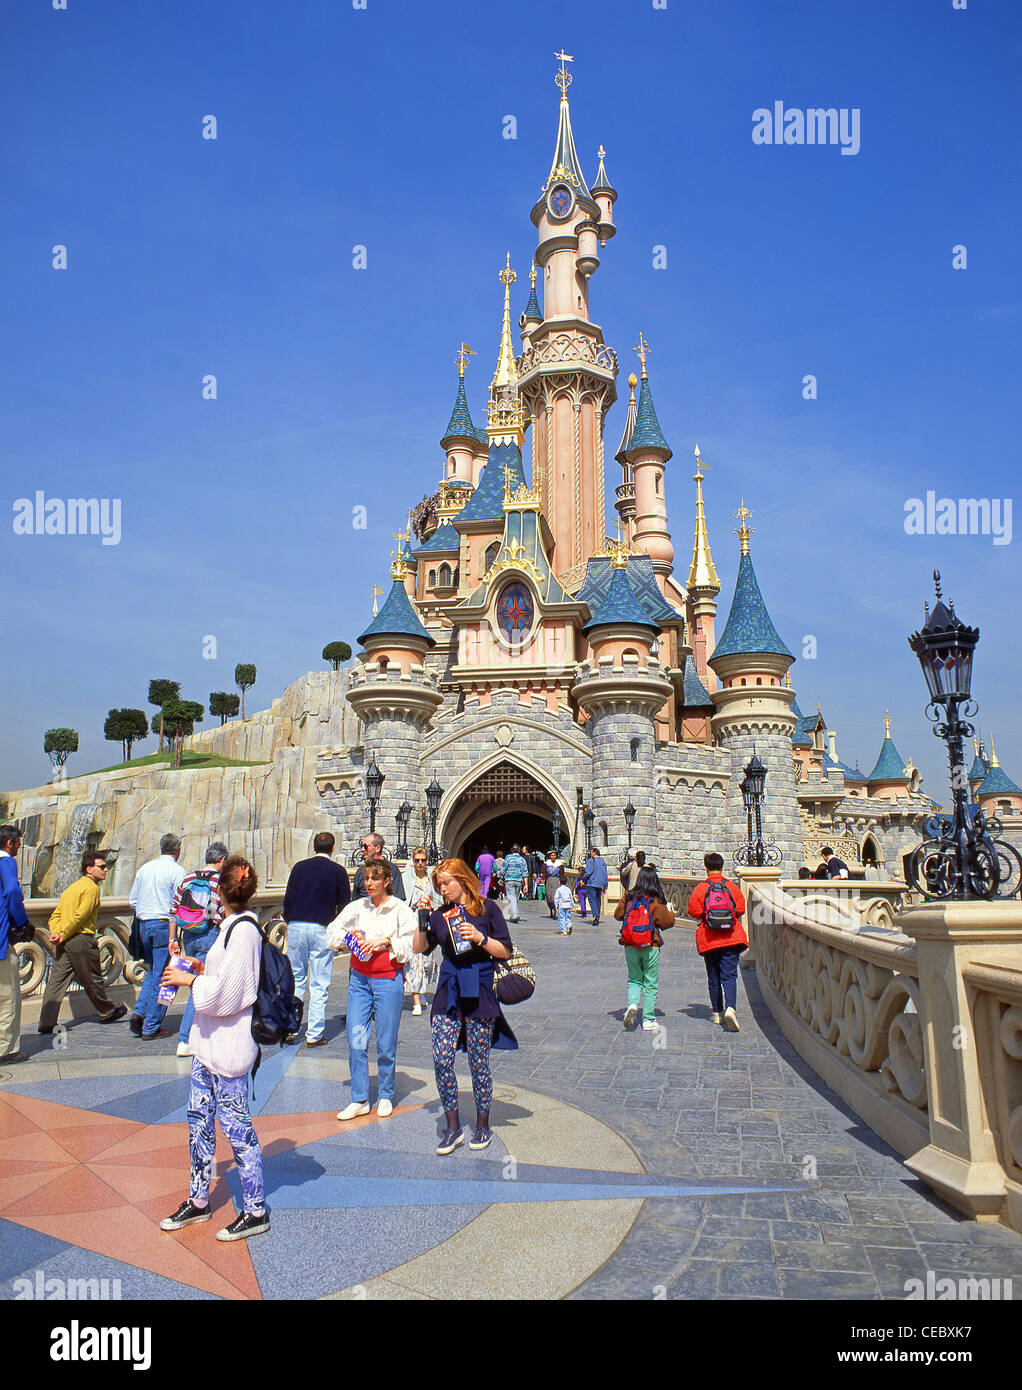 Sleeping Beauty Castle, Disneyland Park, Disneyland Paris, Marne-la-Vallée, Île-de-France, France Stock Photo